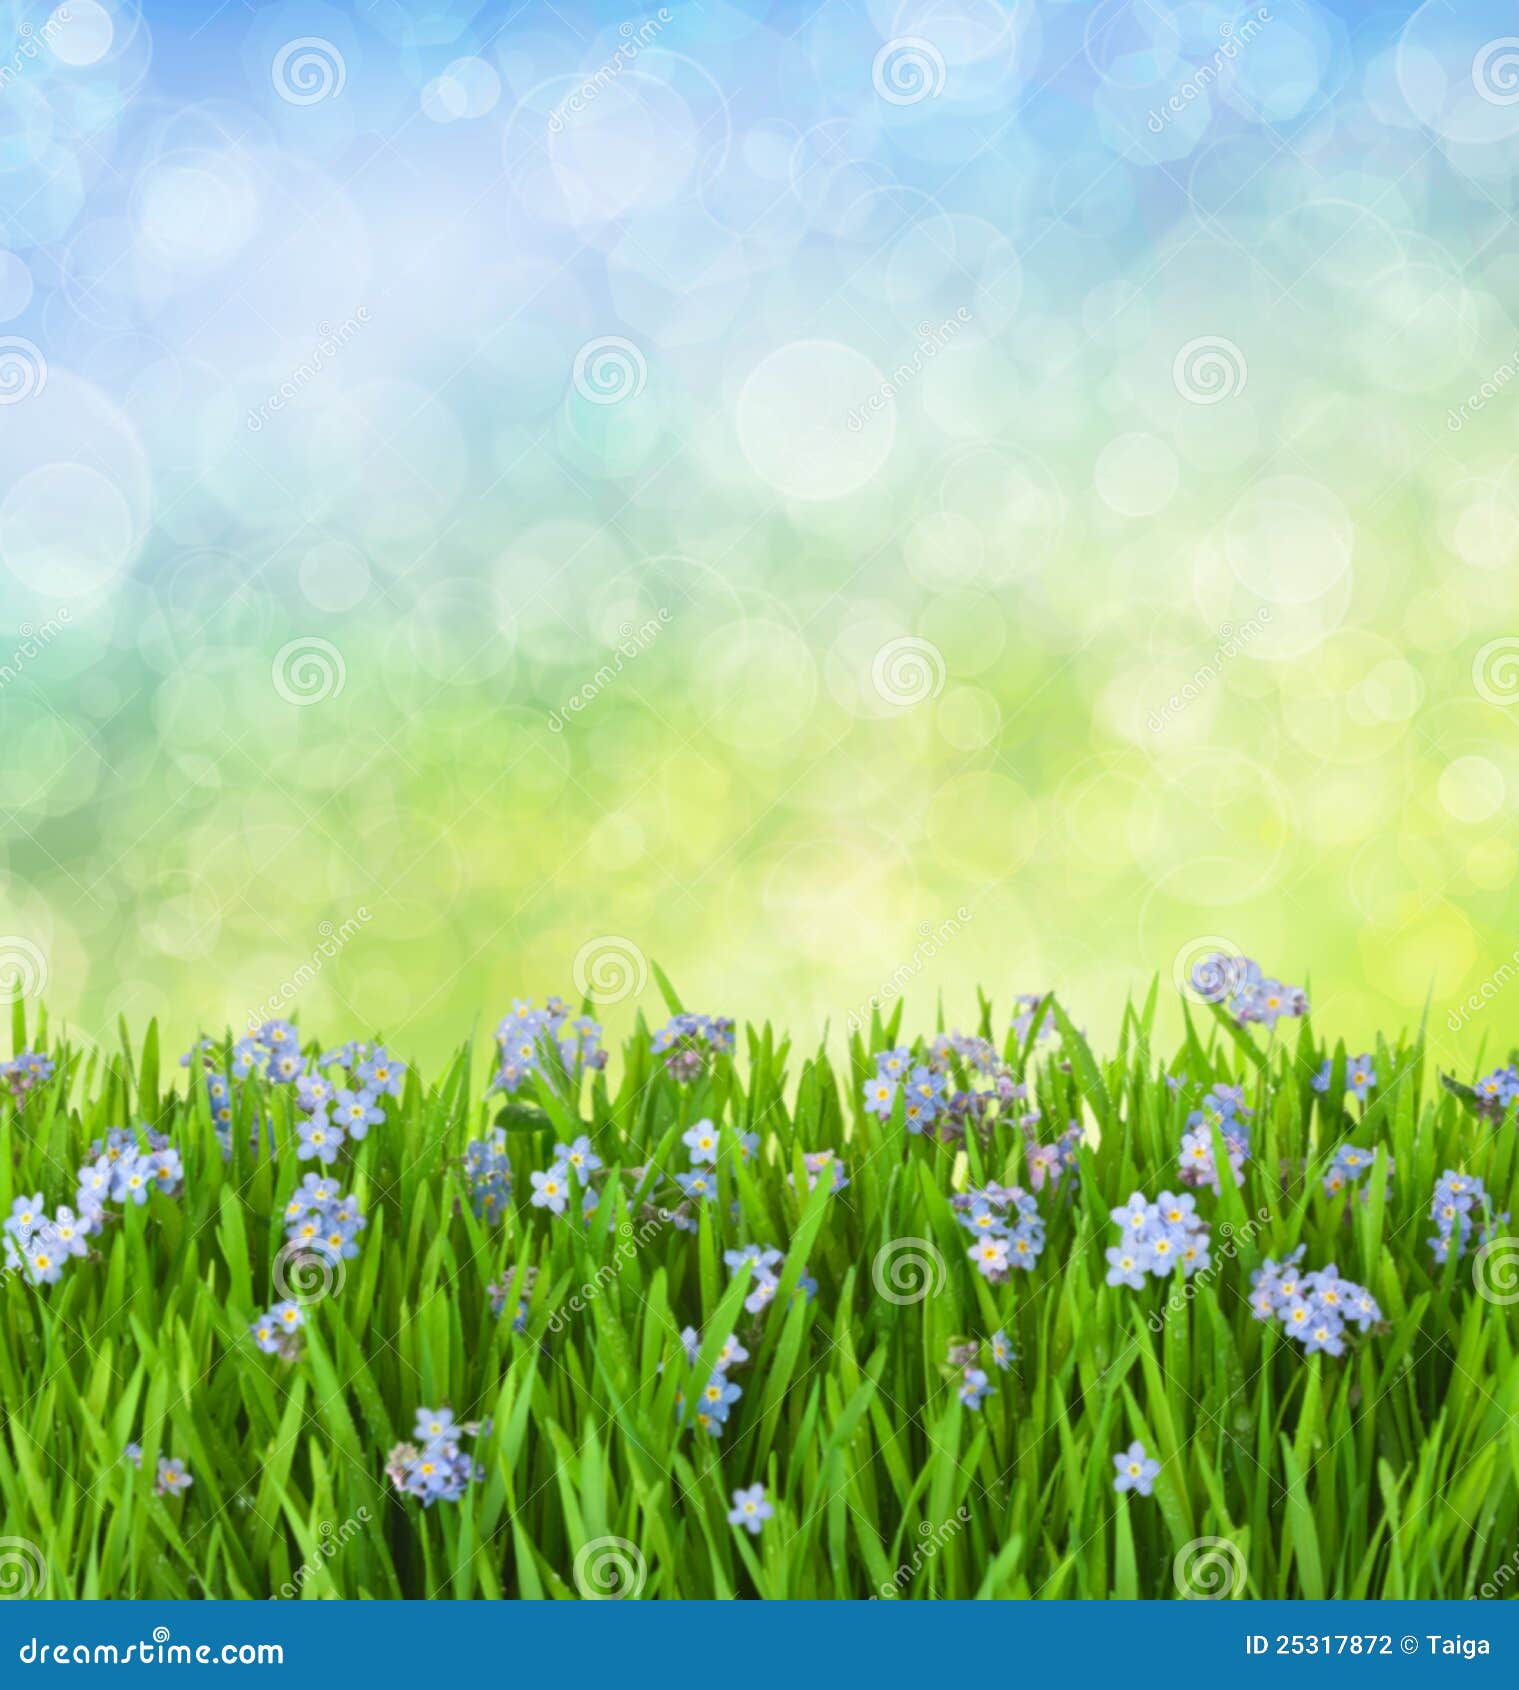 myosotis blue flowers into green grass